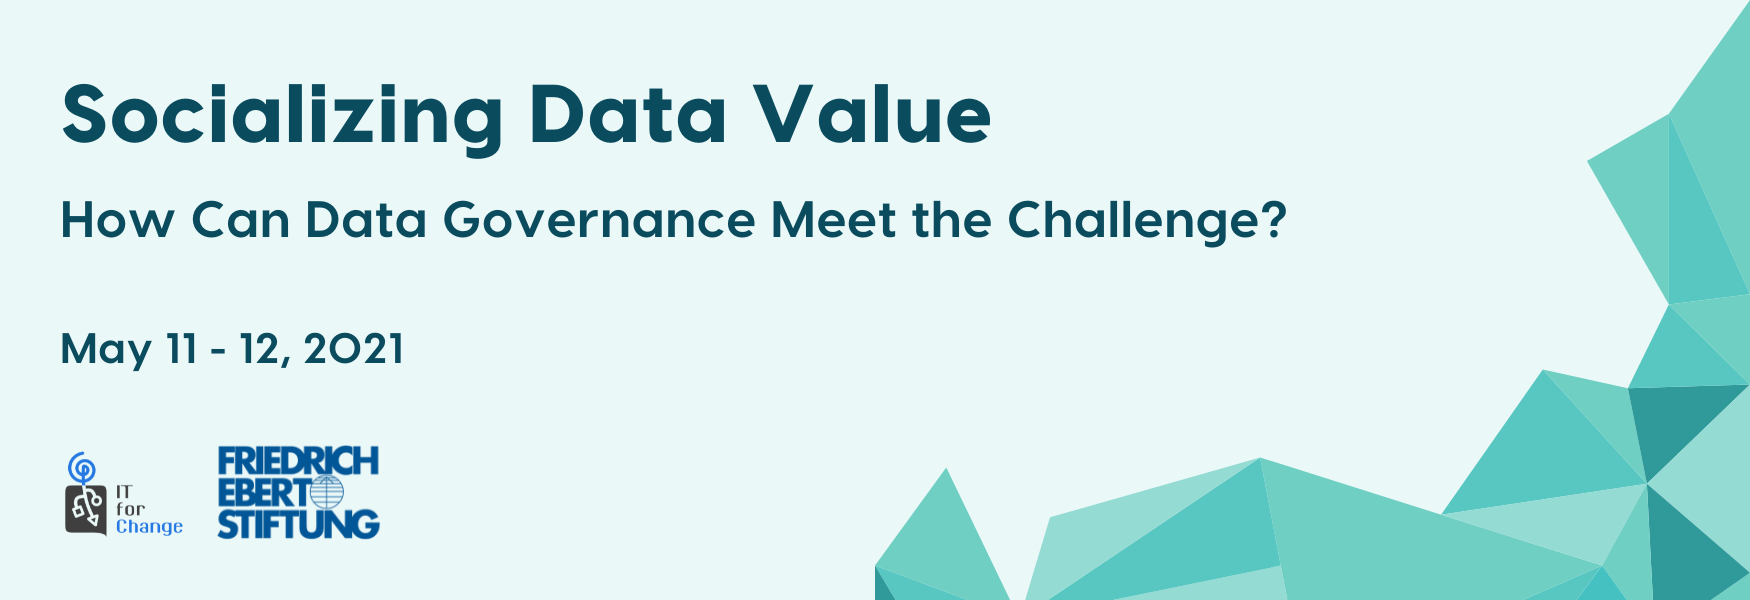 Socializing Data Value: How Can Data Governance Meet the Challenge?